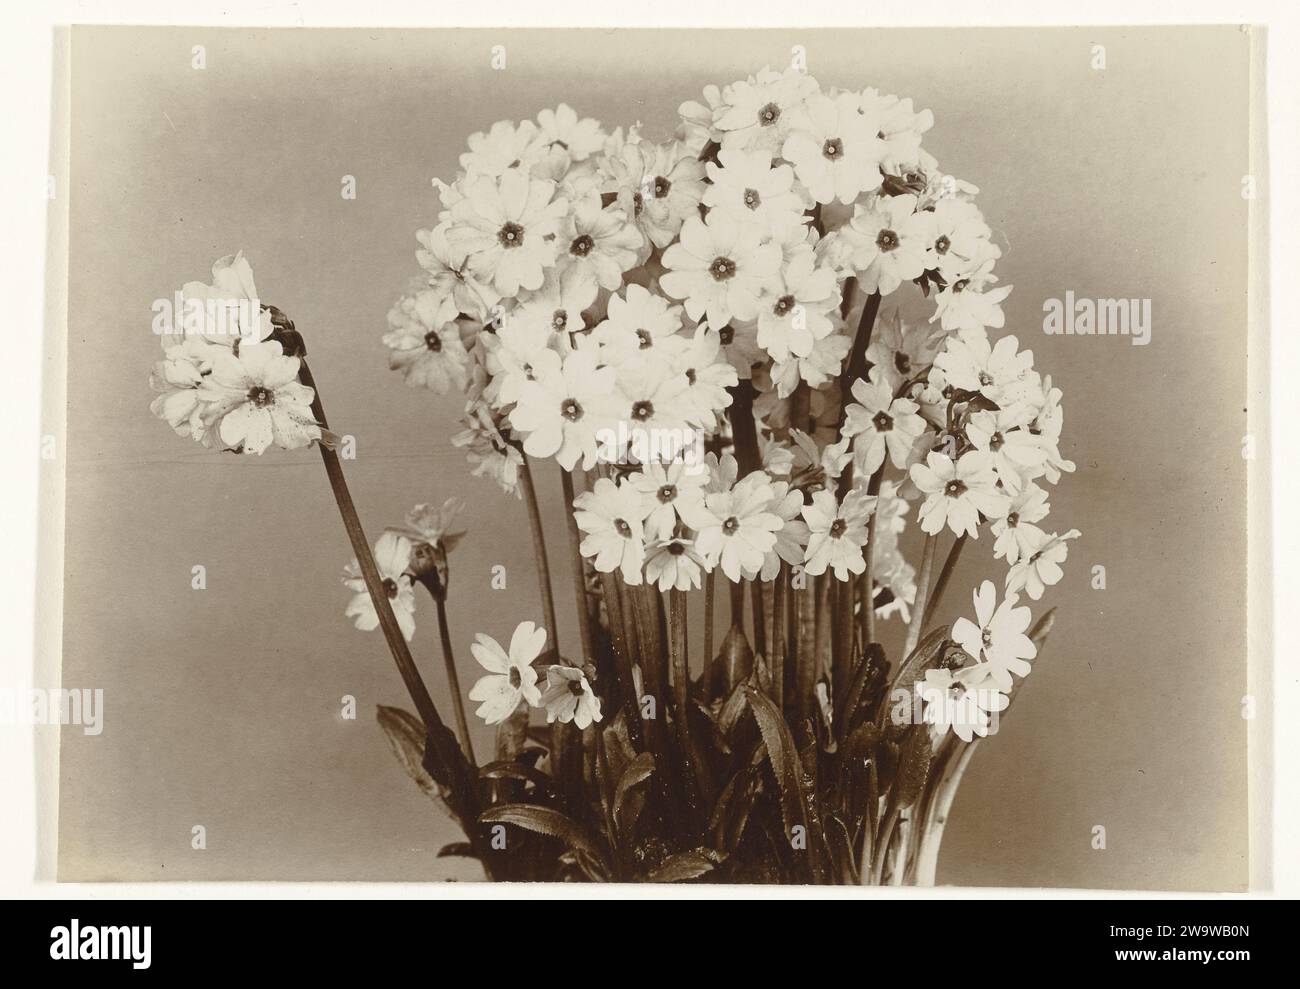 Primula rosea or primrose, c. 1900 - c. 1930 photograph  Netherlands photographic support Stock Photo